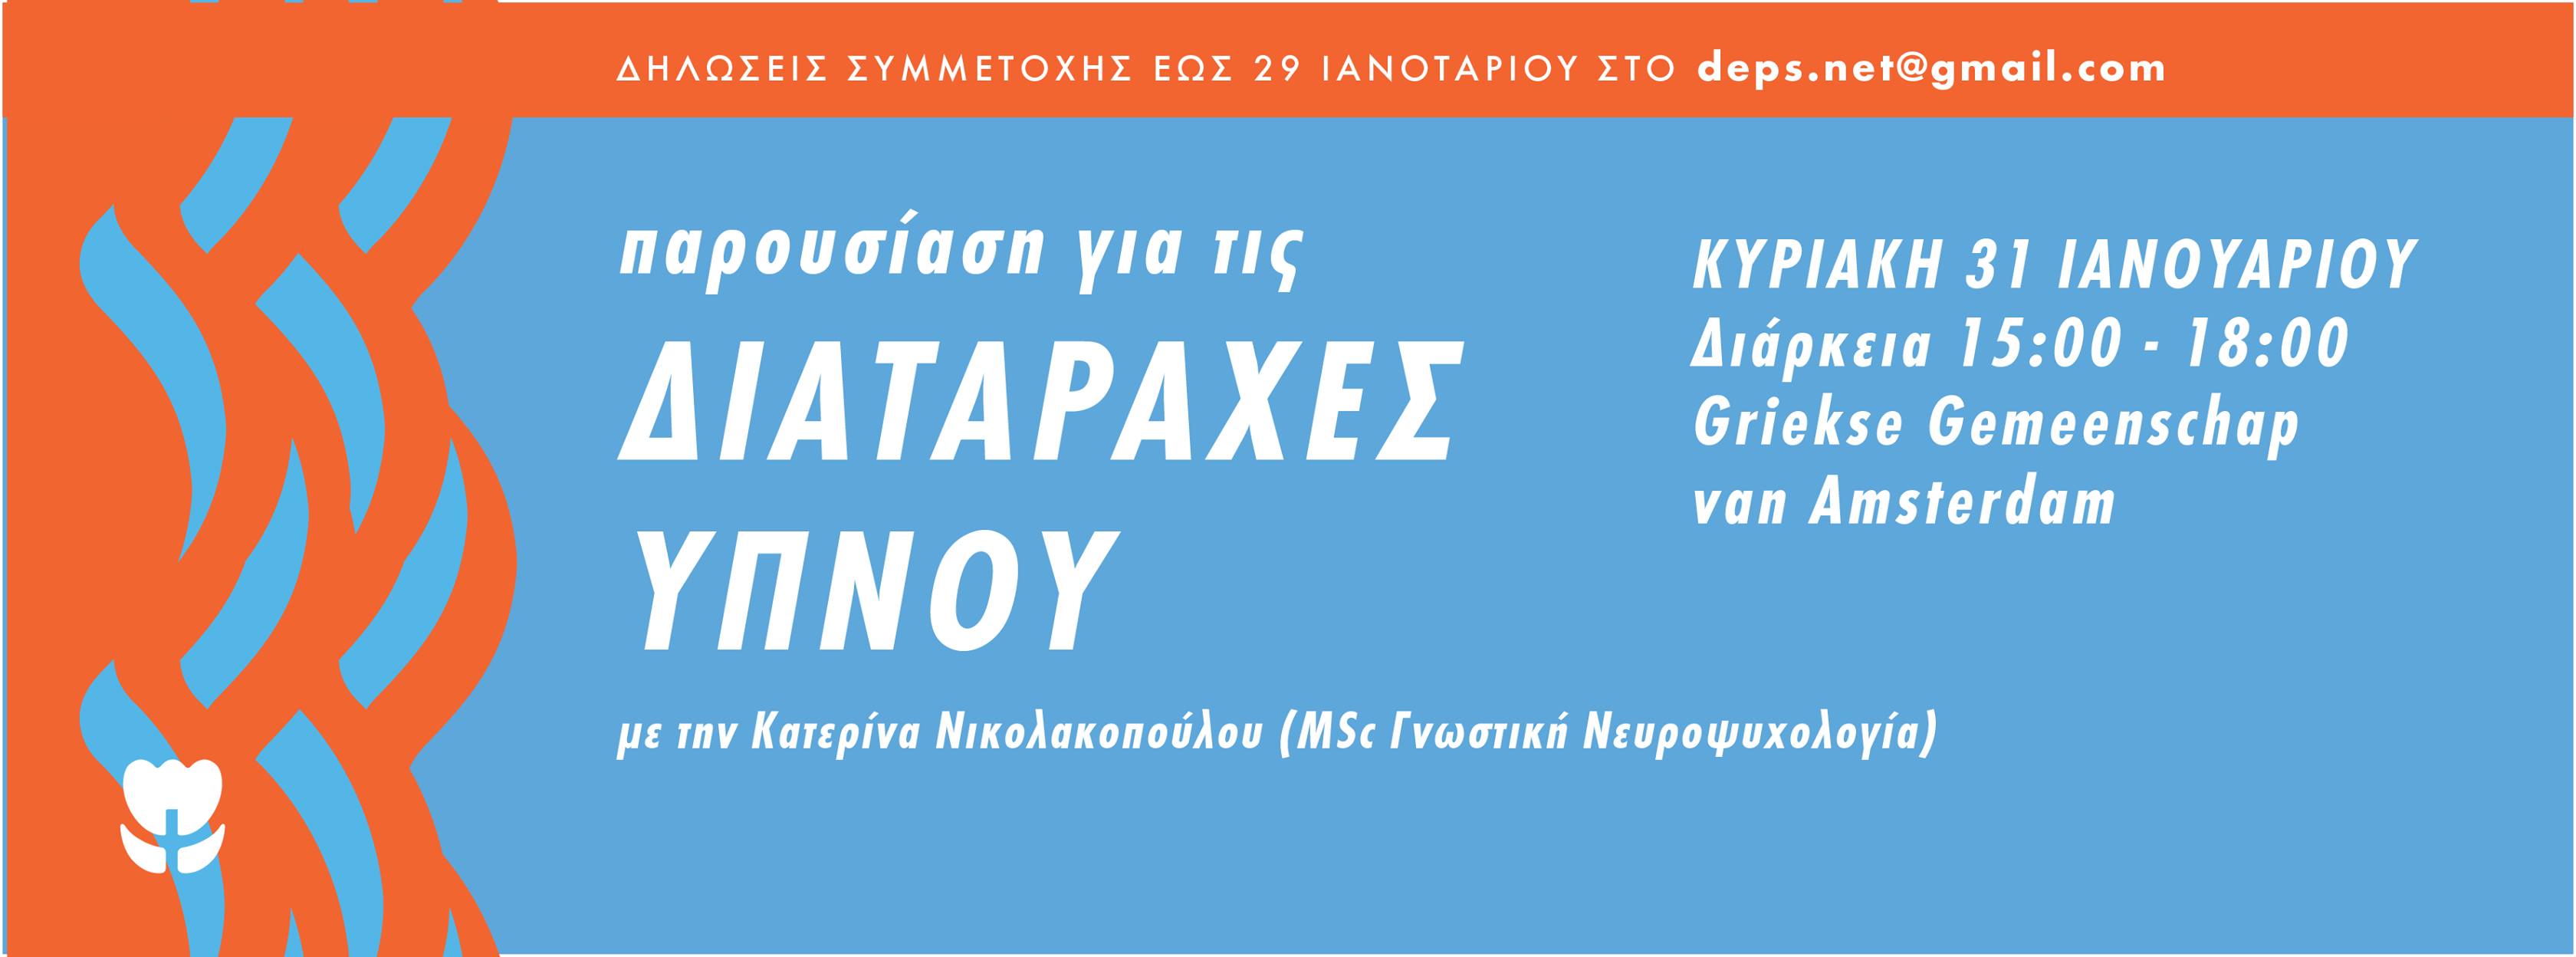 sleep presentation in Greek